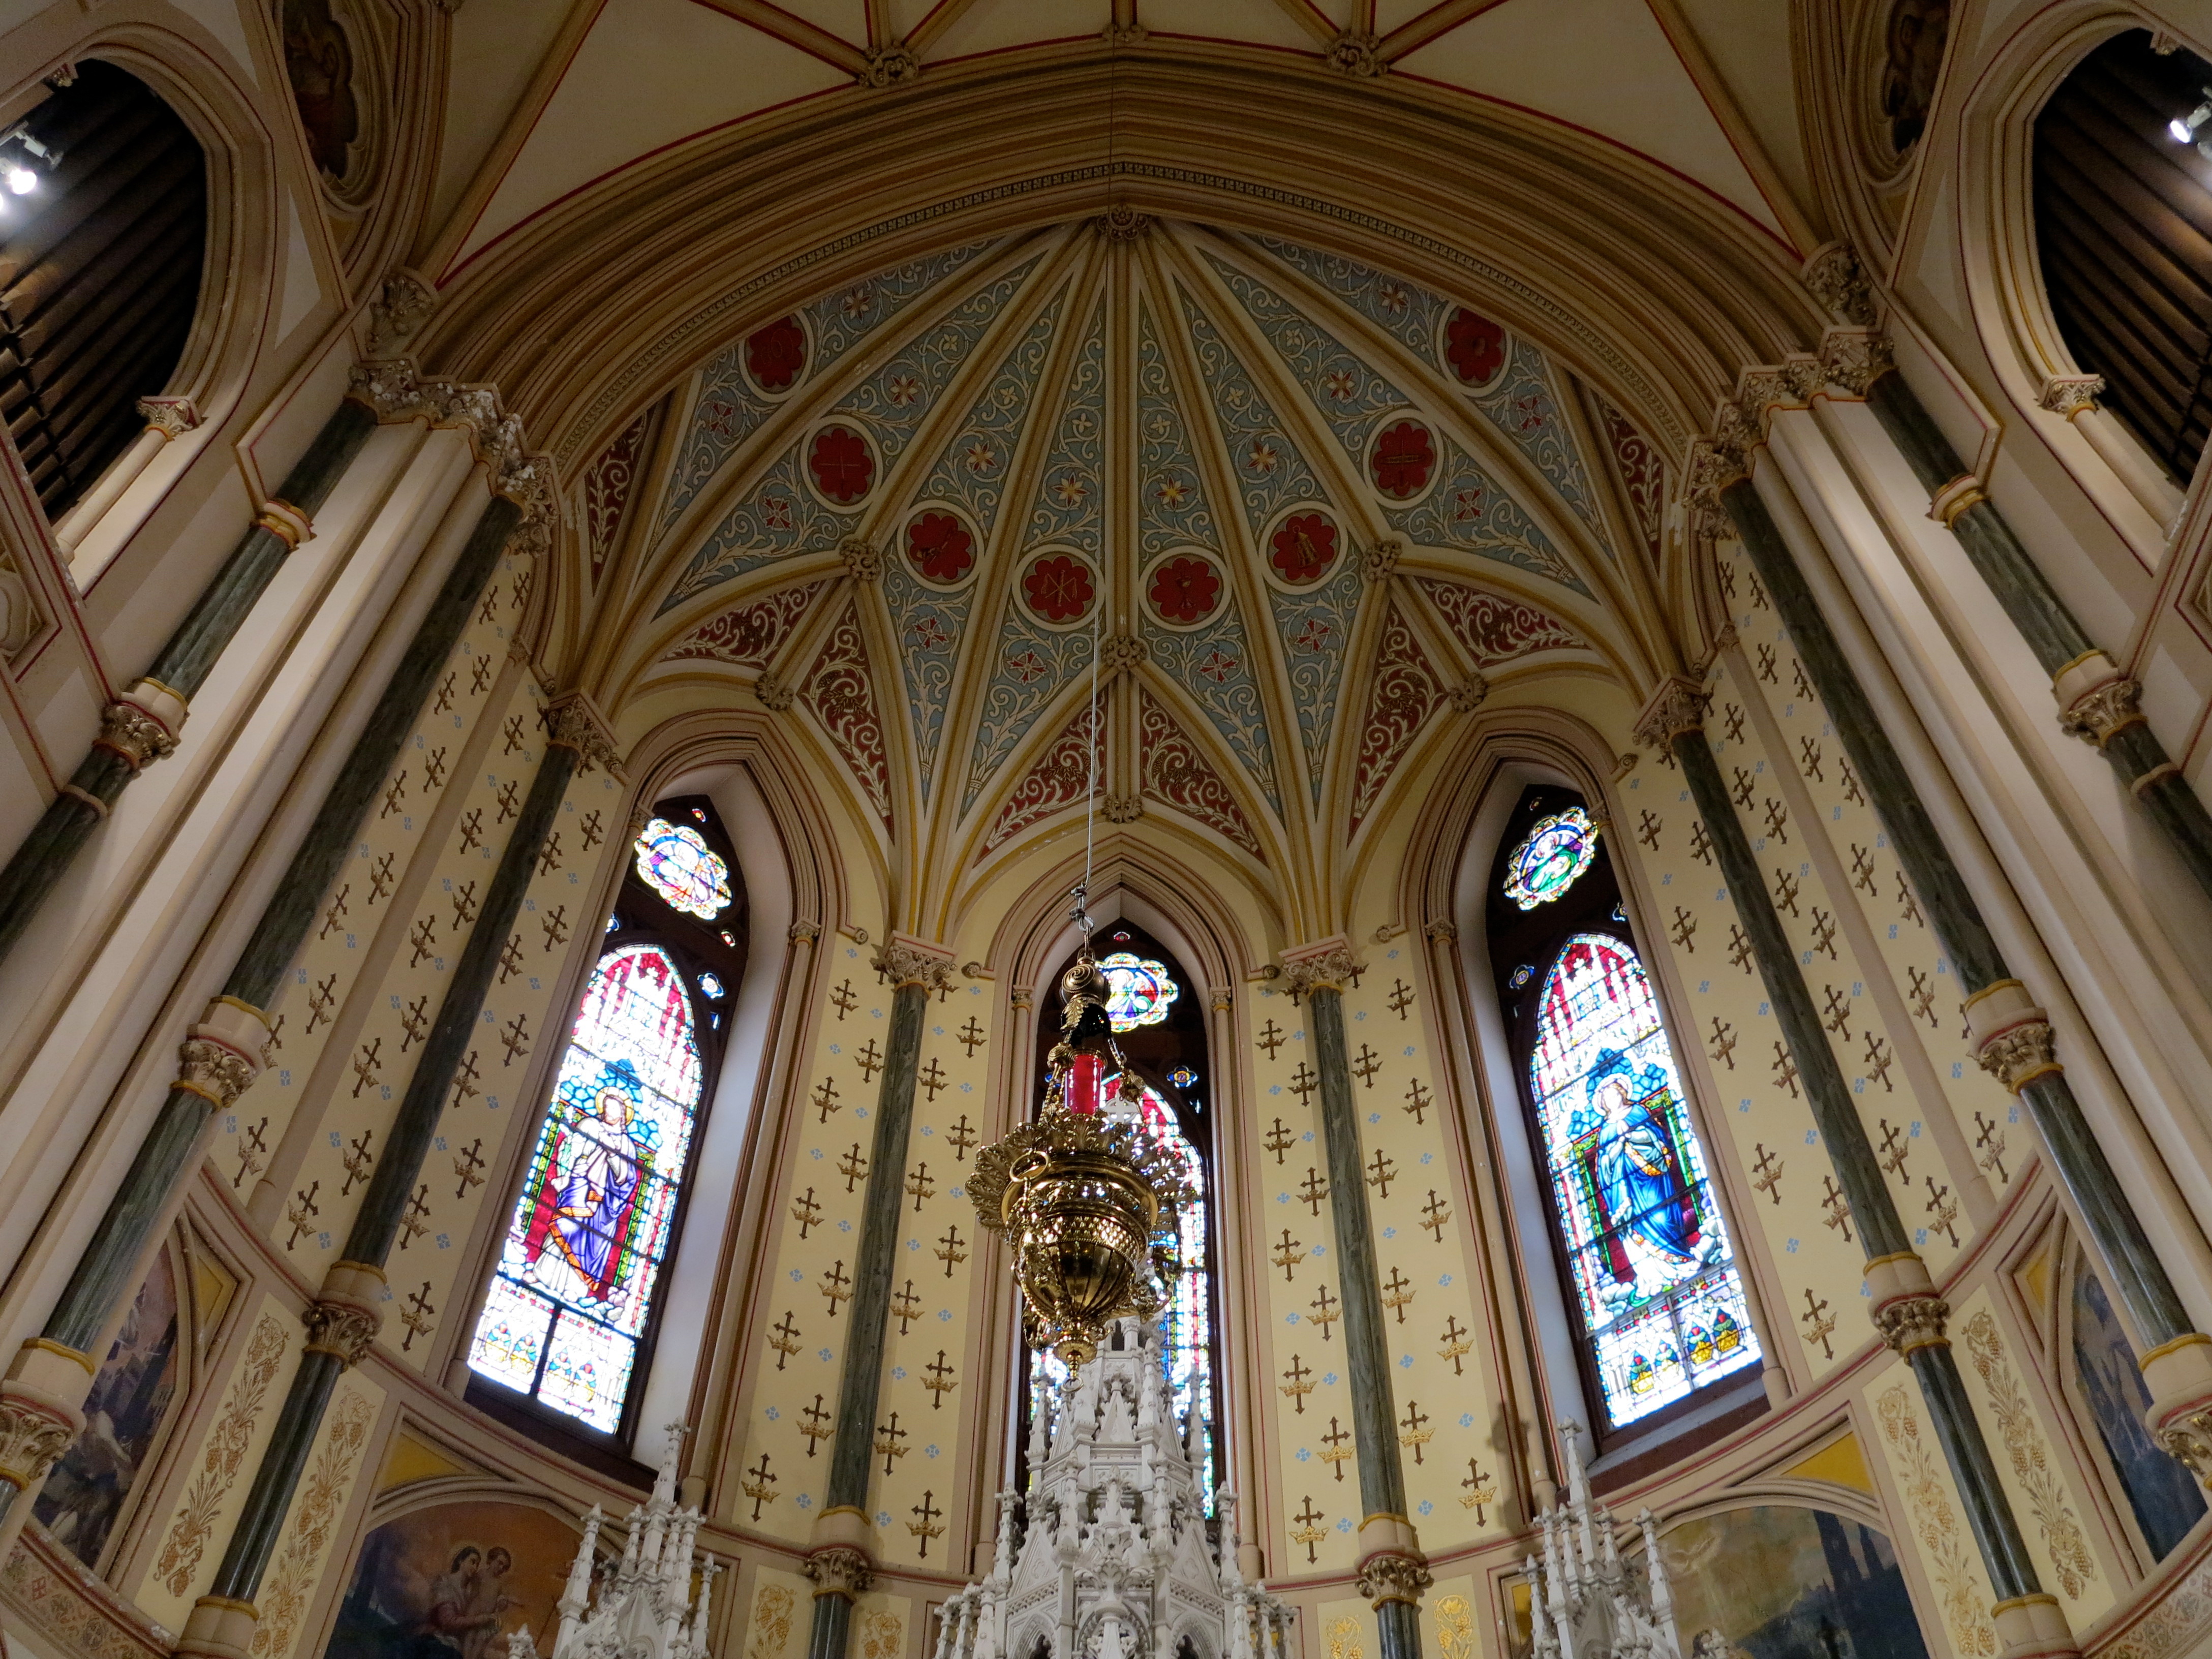 St. John the Baptist's richly decorated interior